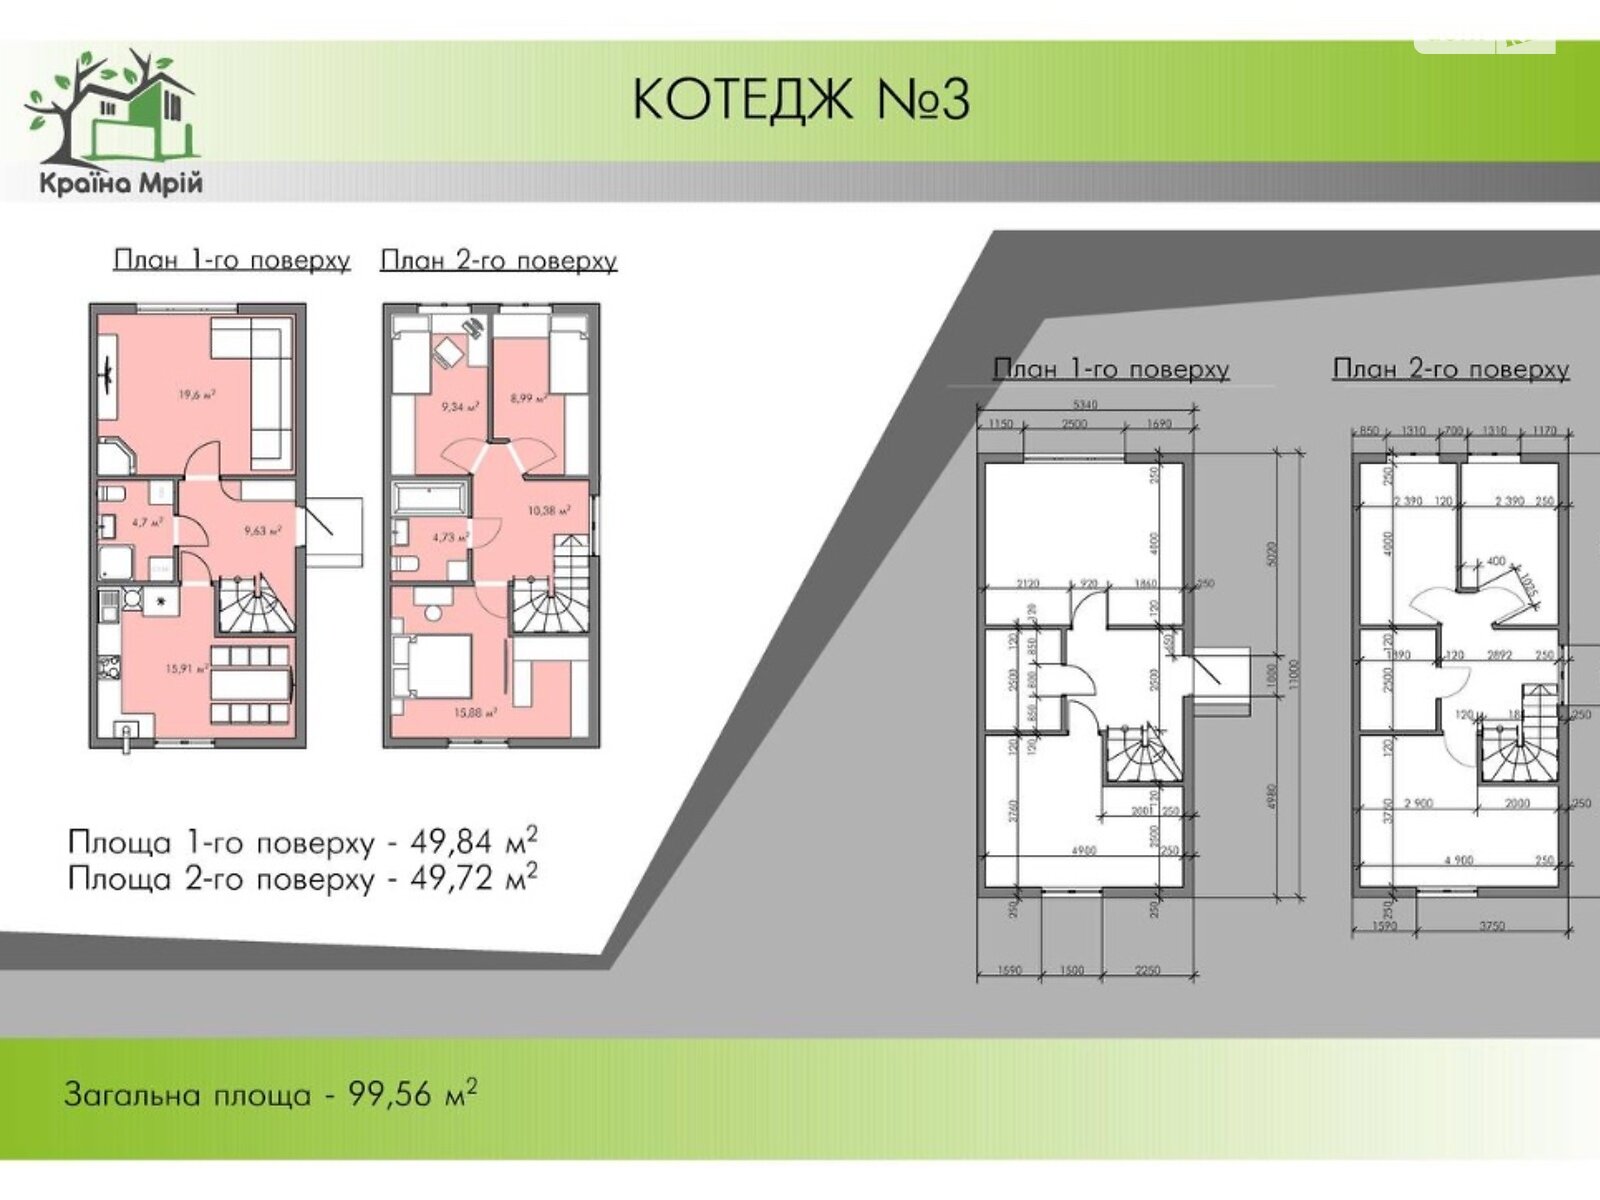 Продажа части дома в Ровно, район Ювилейный, 4 комнаты фото 1